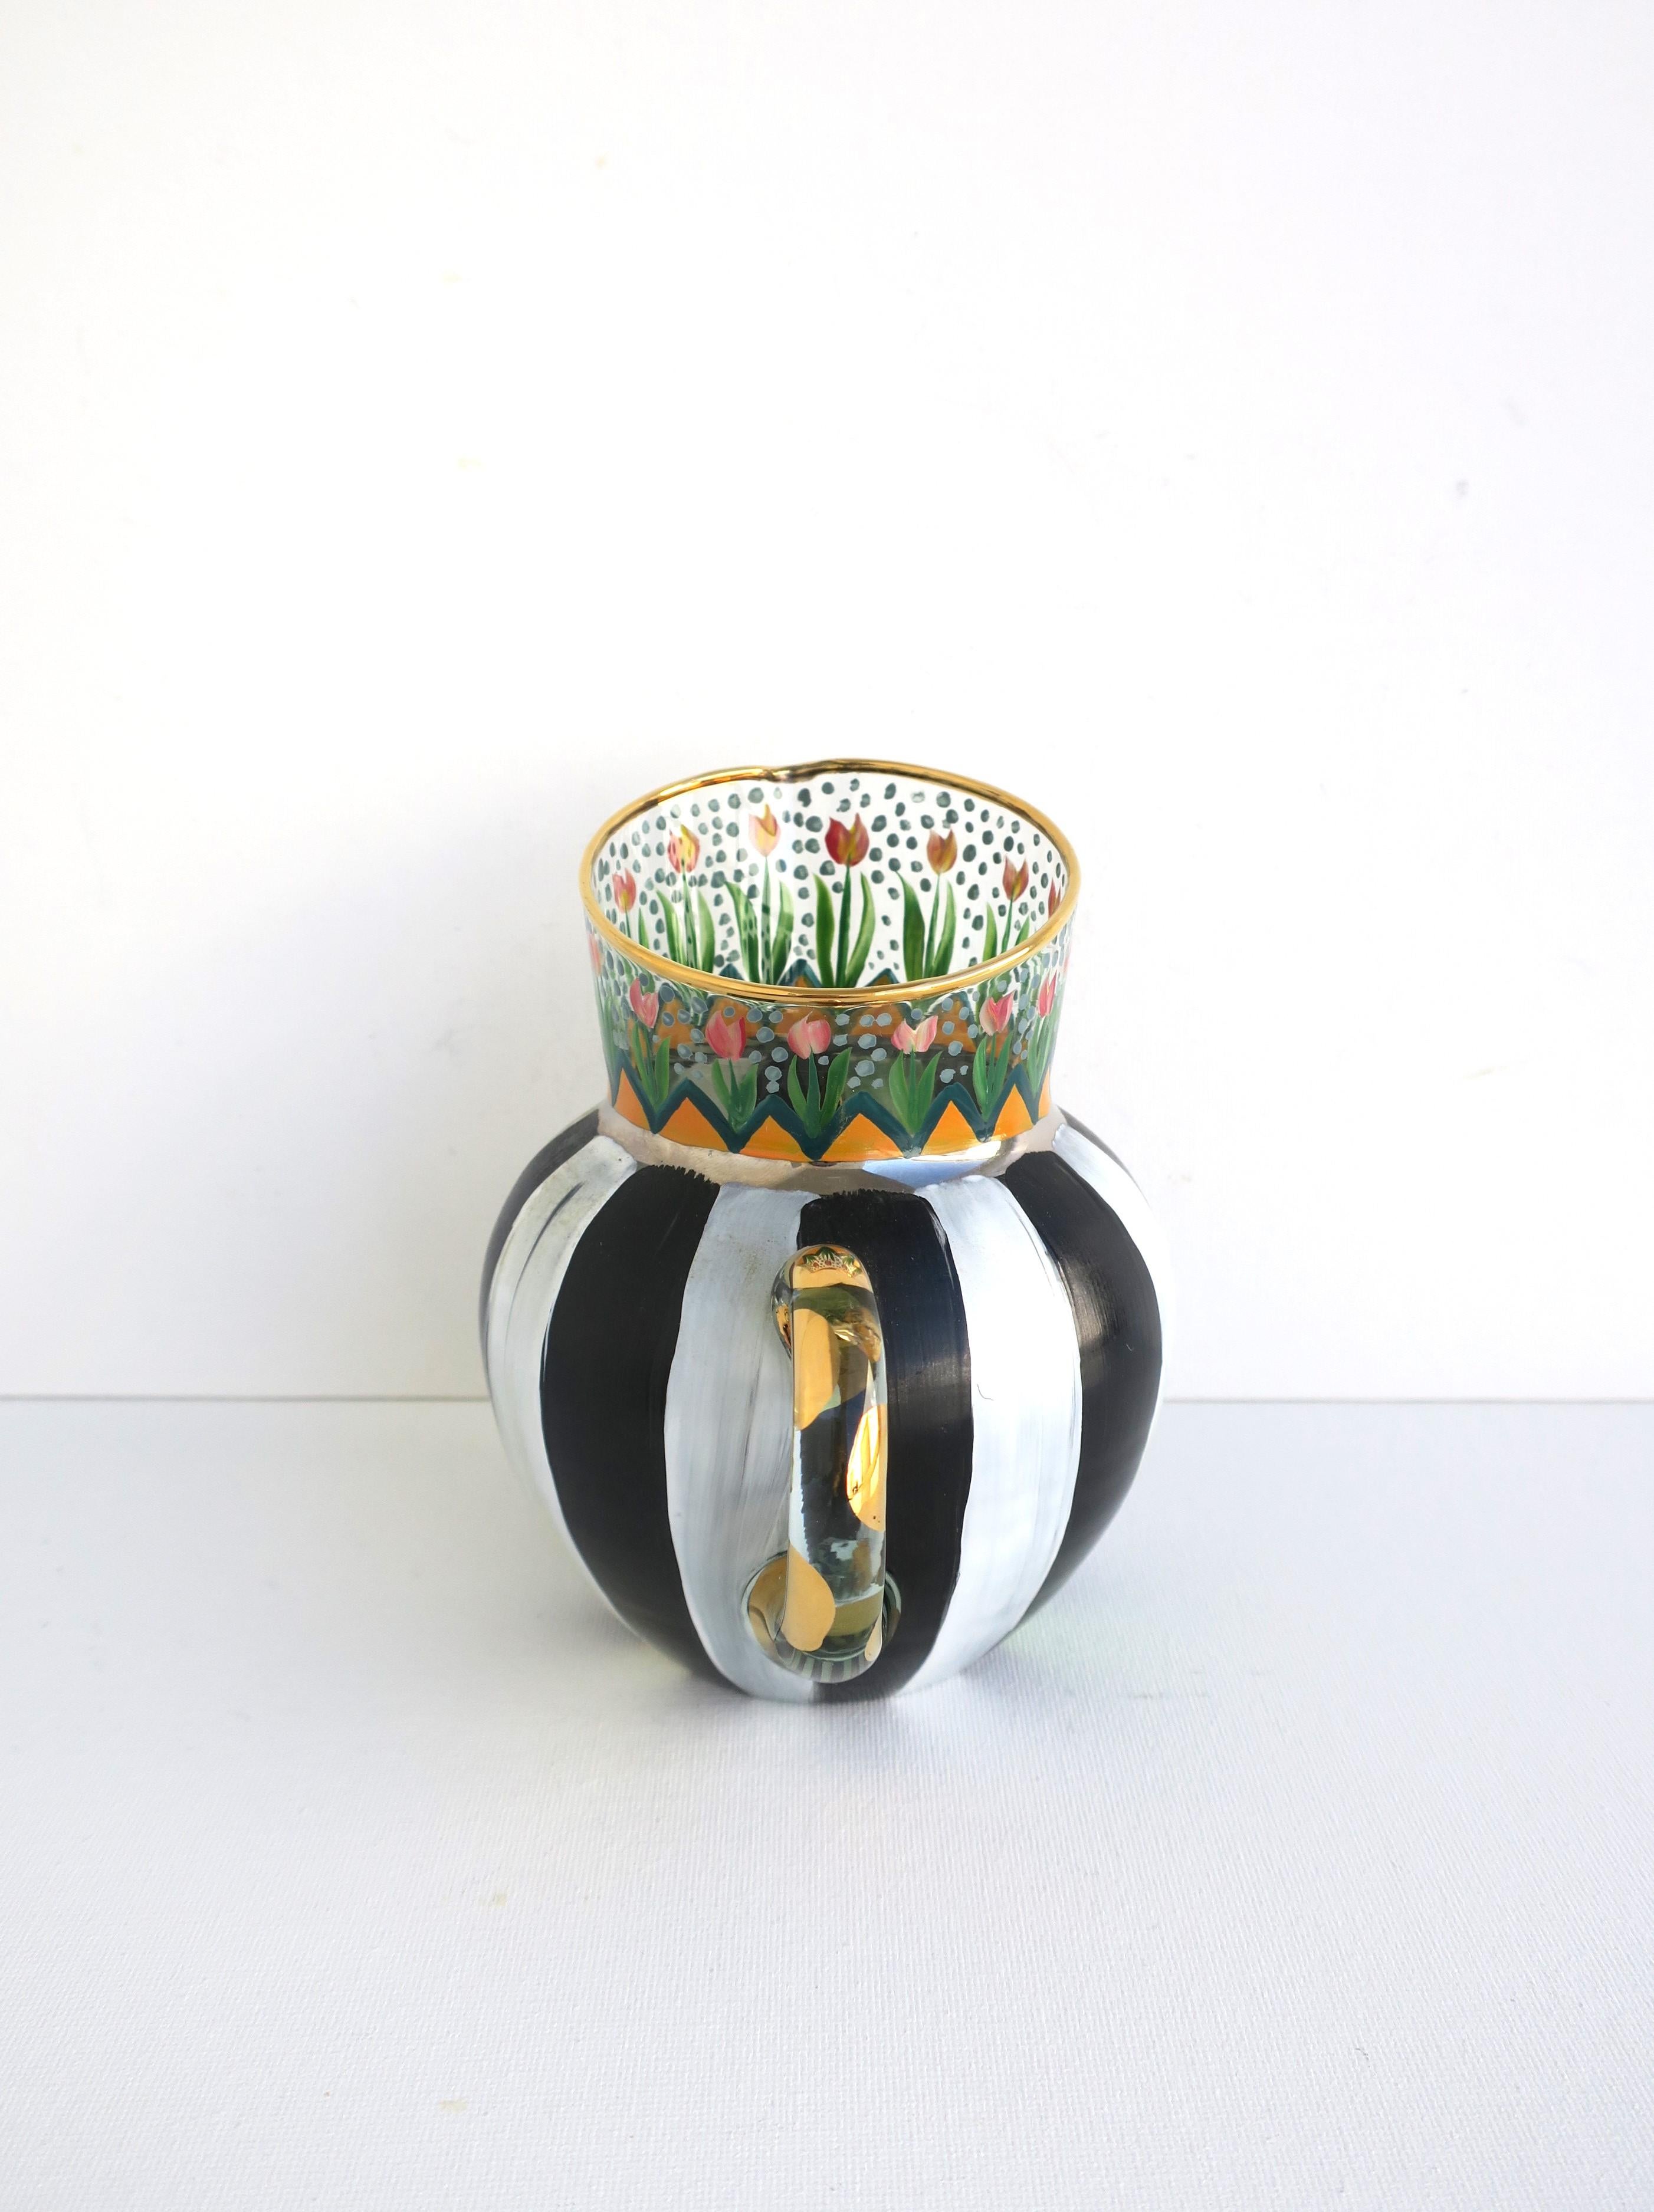 Mackenzie Childs Art Glass Pitcher or Vase with Garden Design, circa 1990s For Sale 1